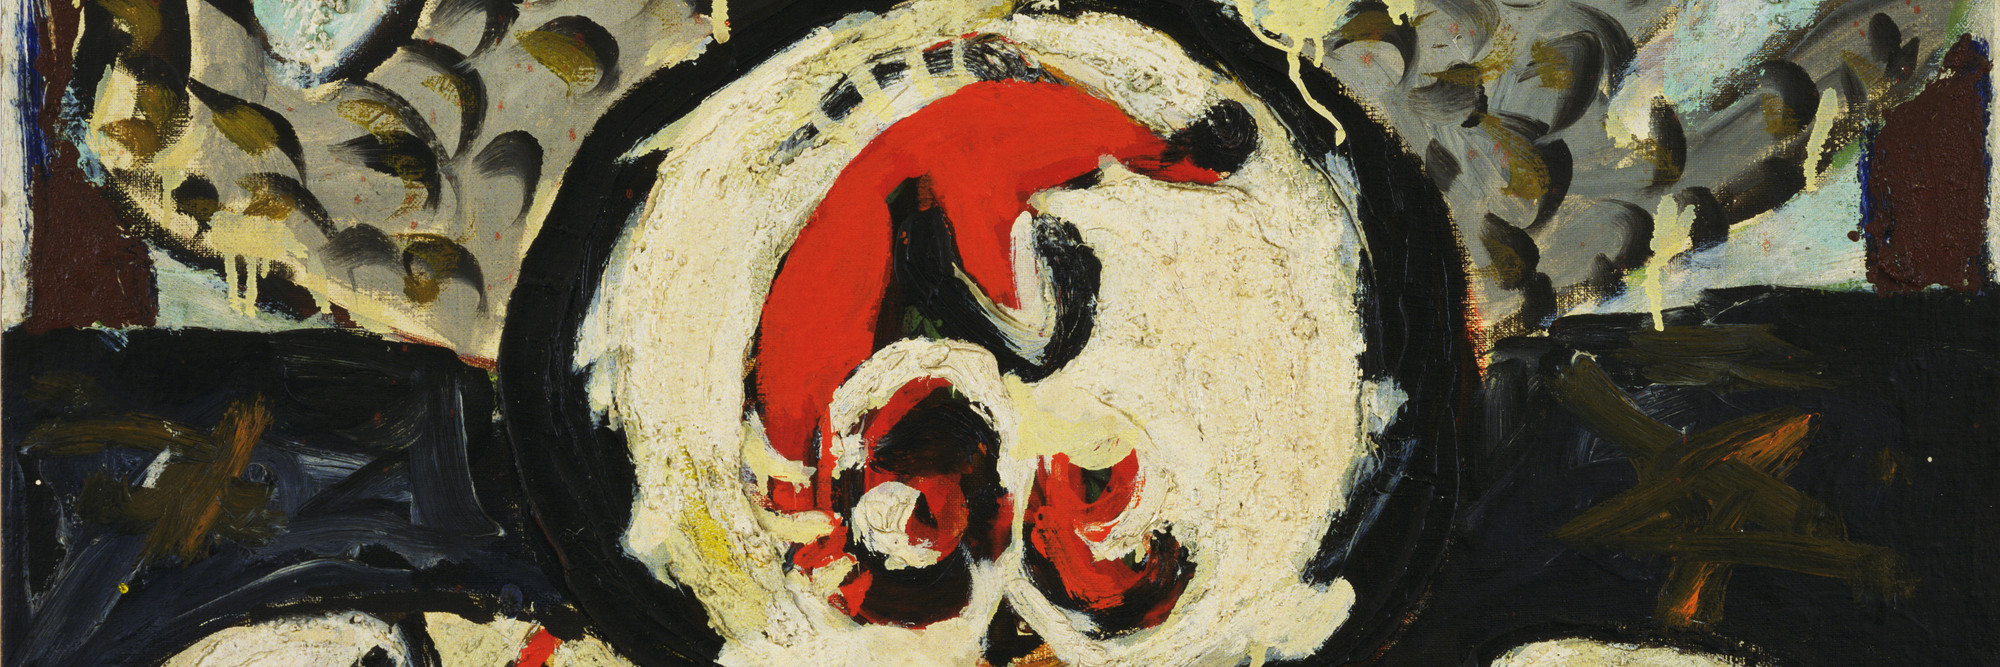 Jackson Pollock. Bird. c. 1938–41. Oil and sand on canvas, 27 3/4 × 24 1/4ʺ (70.5 × 61.6 cm). Gift of Lee Krasner in memory of Jackson Pollock. © 2016 Pollock-Krasner Foundation / Artists Rights Society (ARS), New York